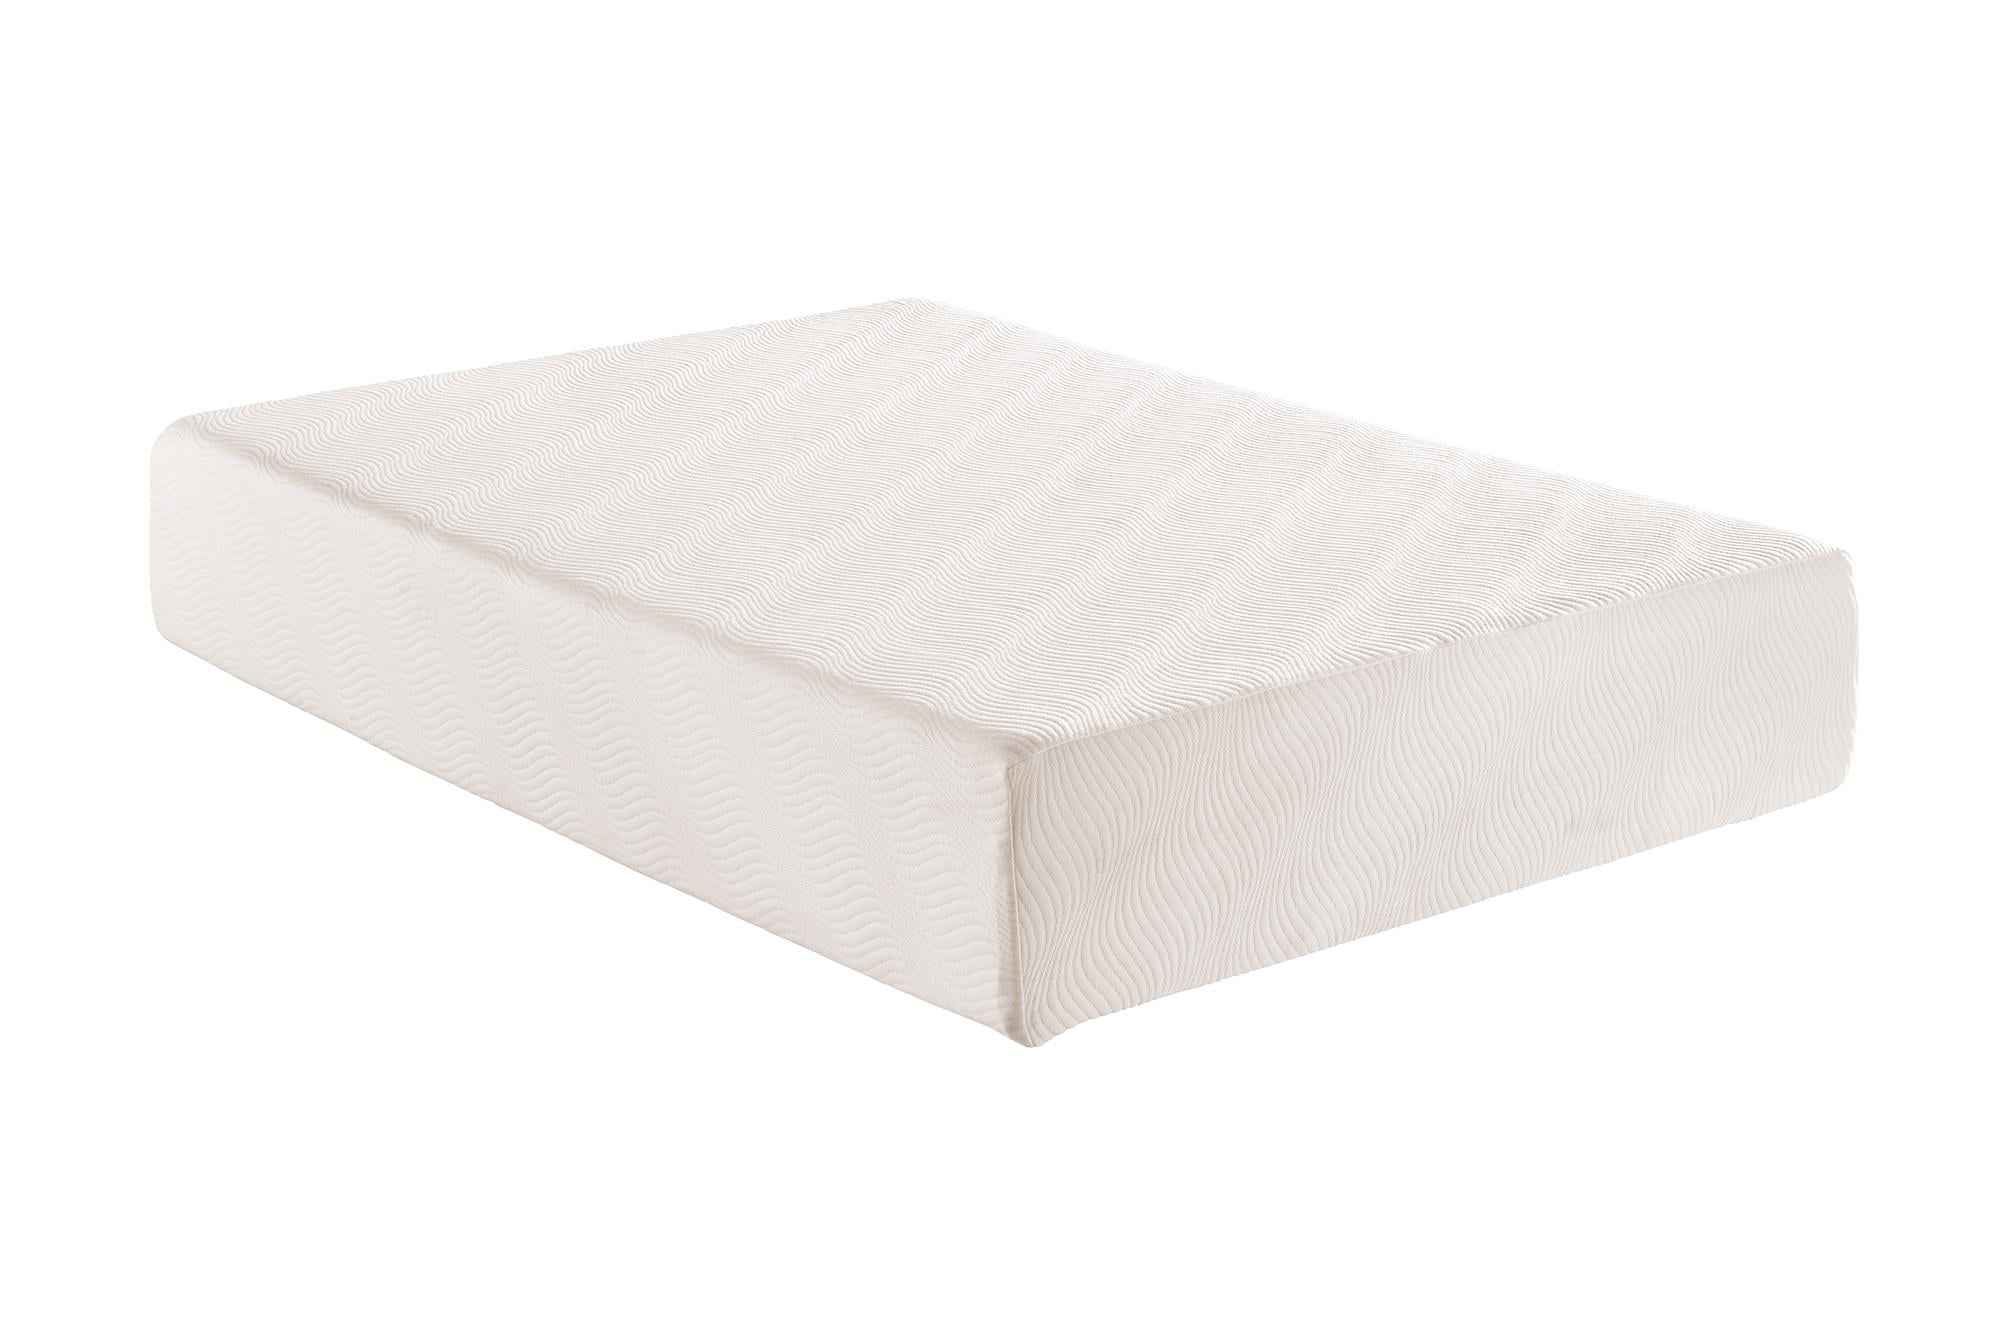 mainstays 2 inch memory foam mattress topper